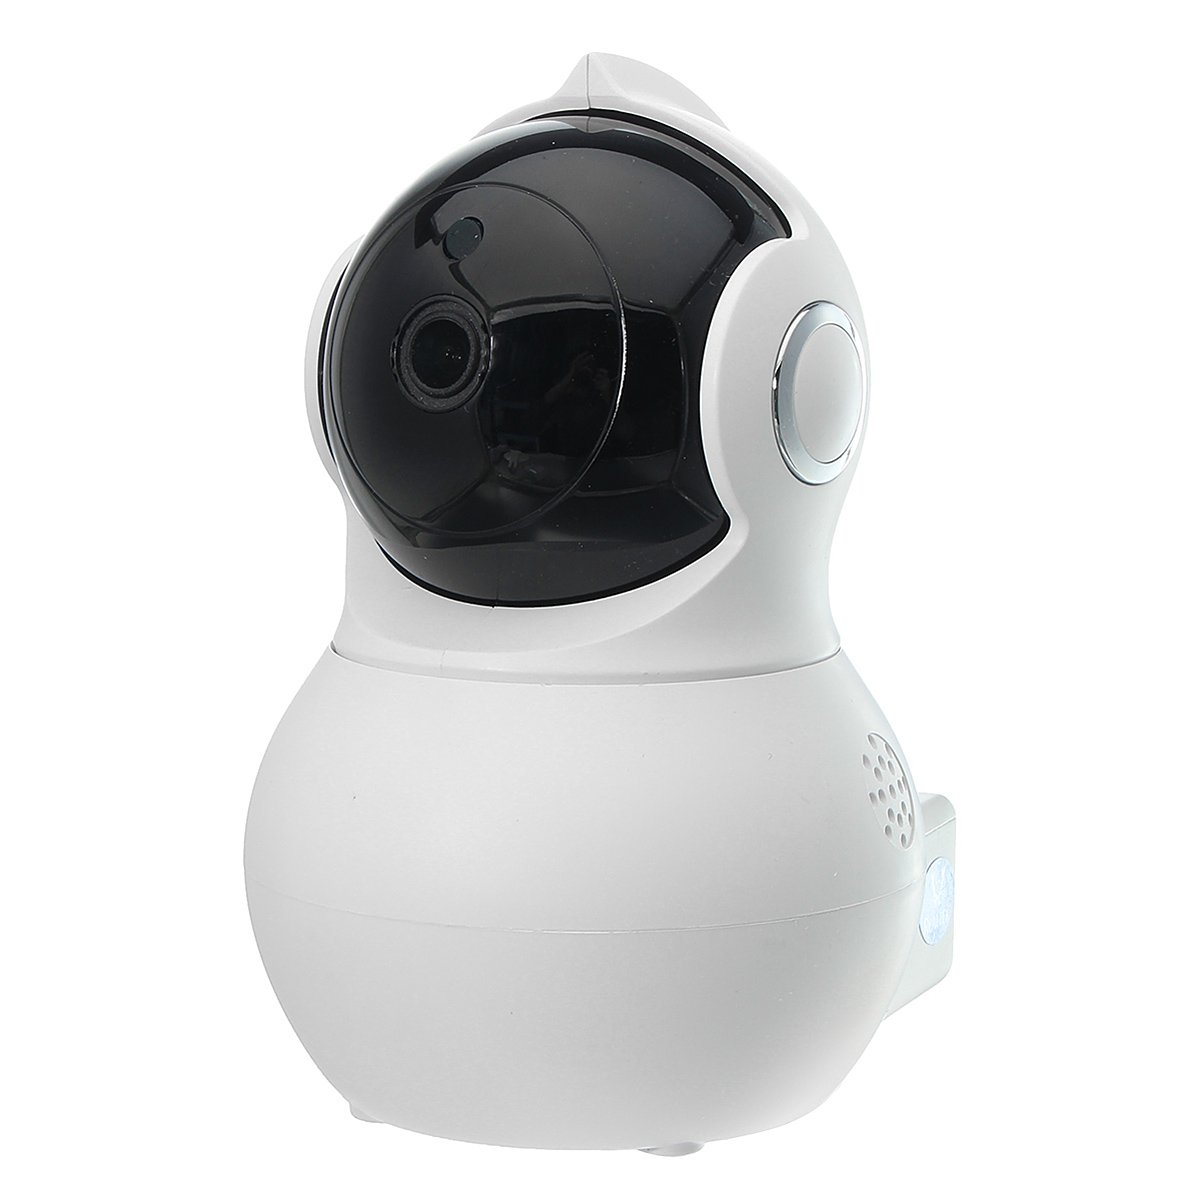 Q8 Home Security 1080P HD IP Camrea Wireless Smart WI-FI Audio CCTV Camera Webcam 2